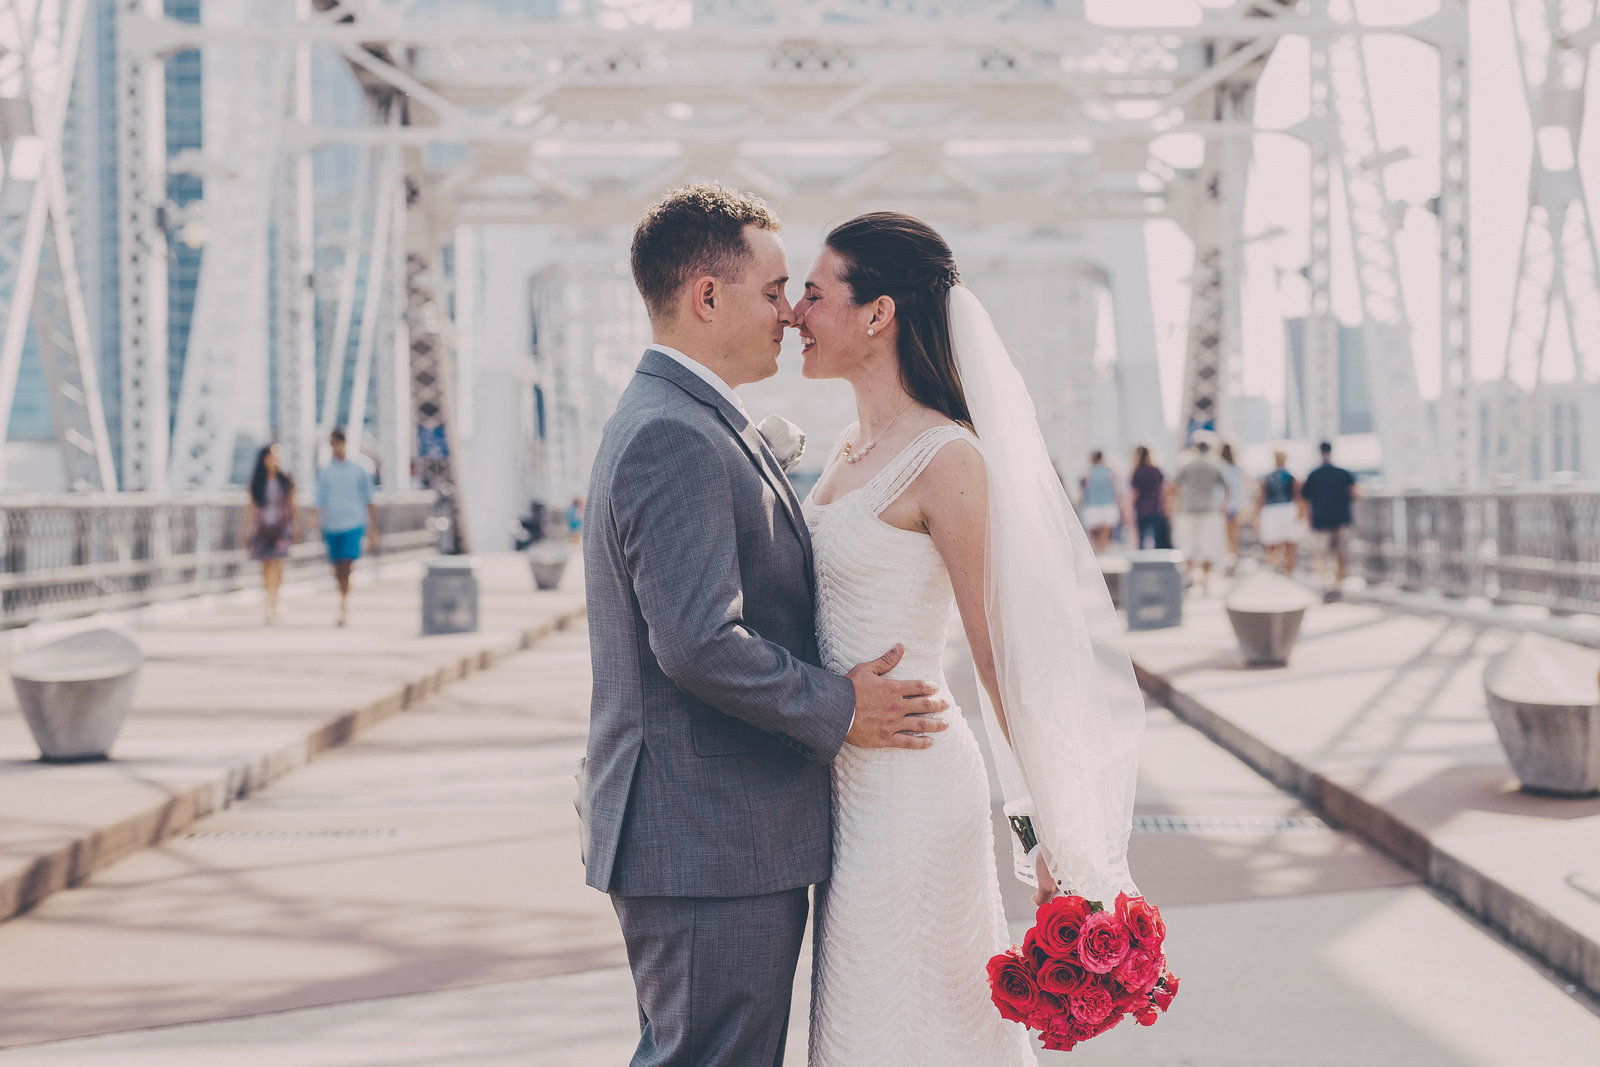 Premier Louisville wedding photographers.